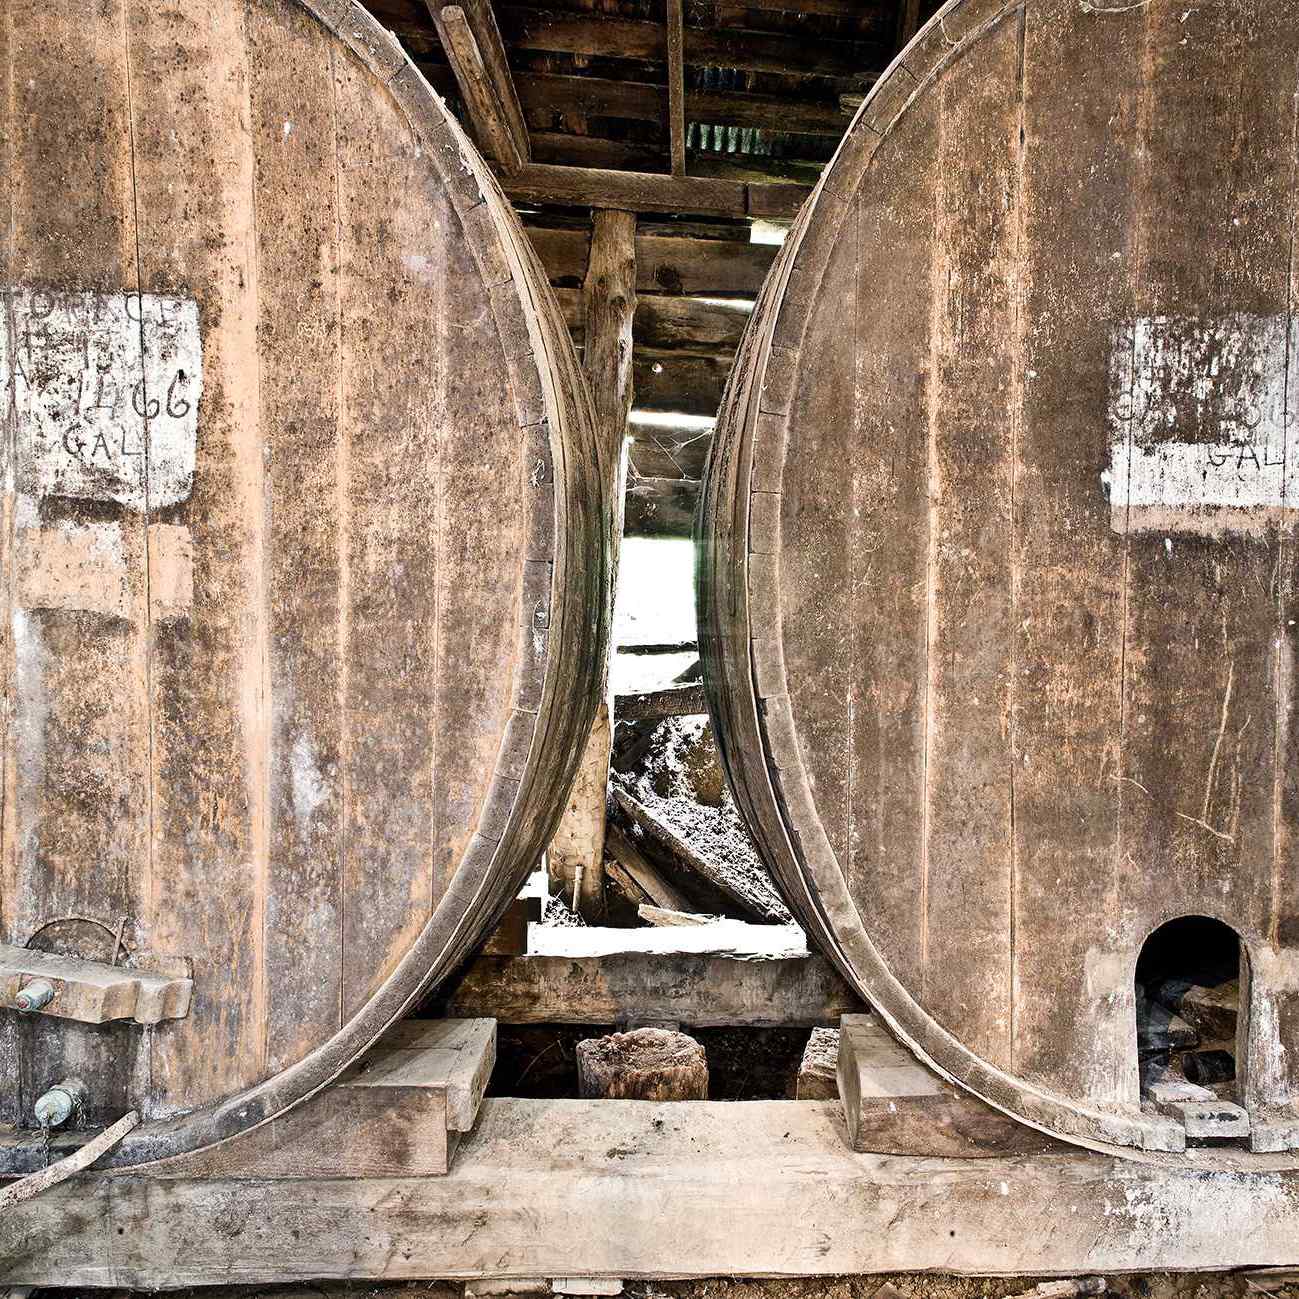 Giant wine barrels